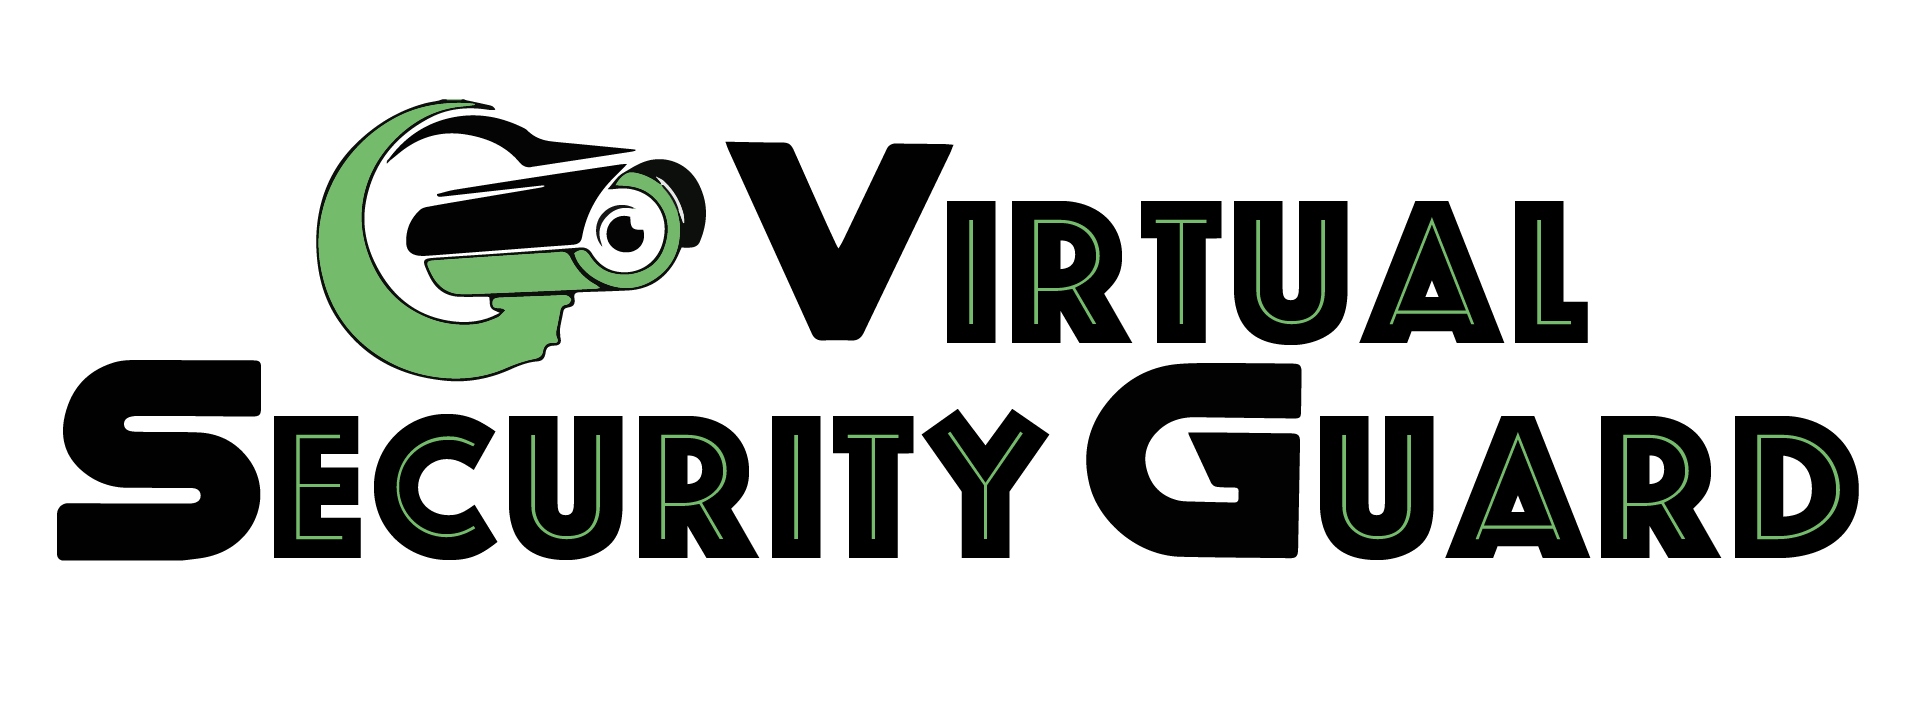 Virtual Security Guard